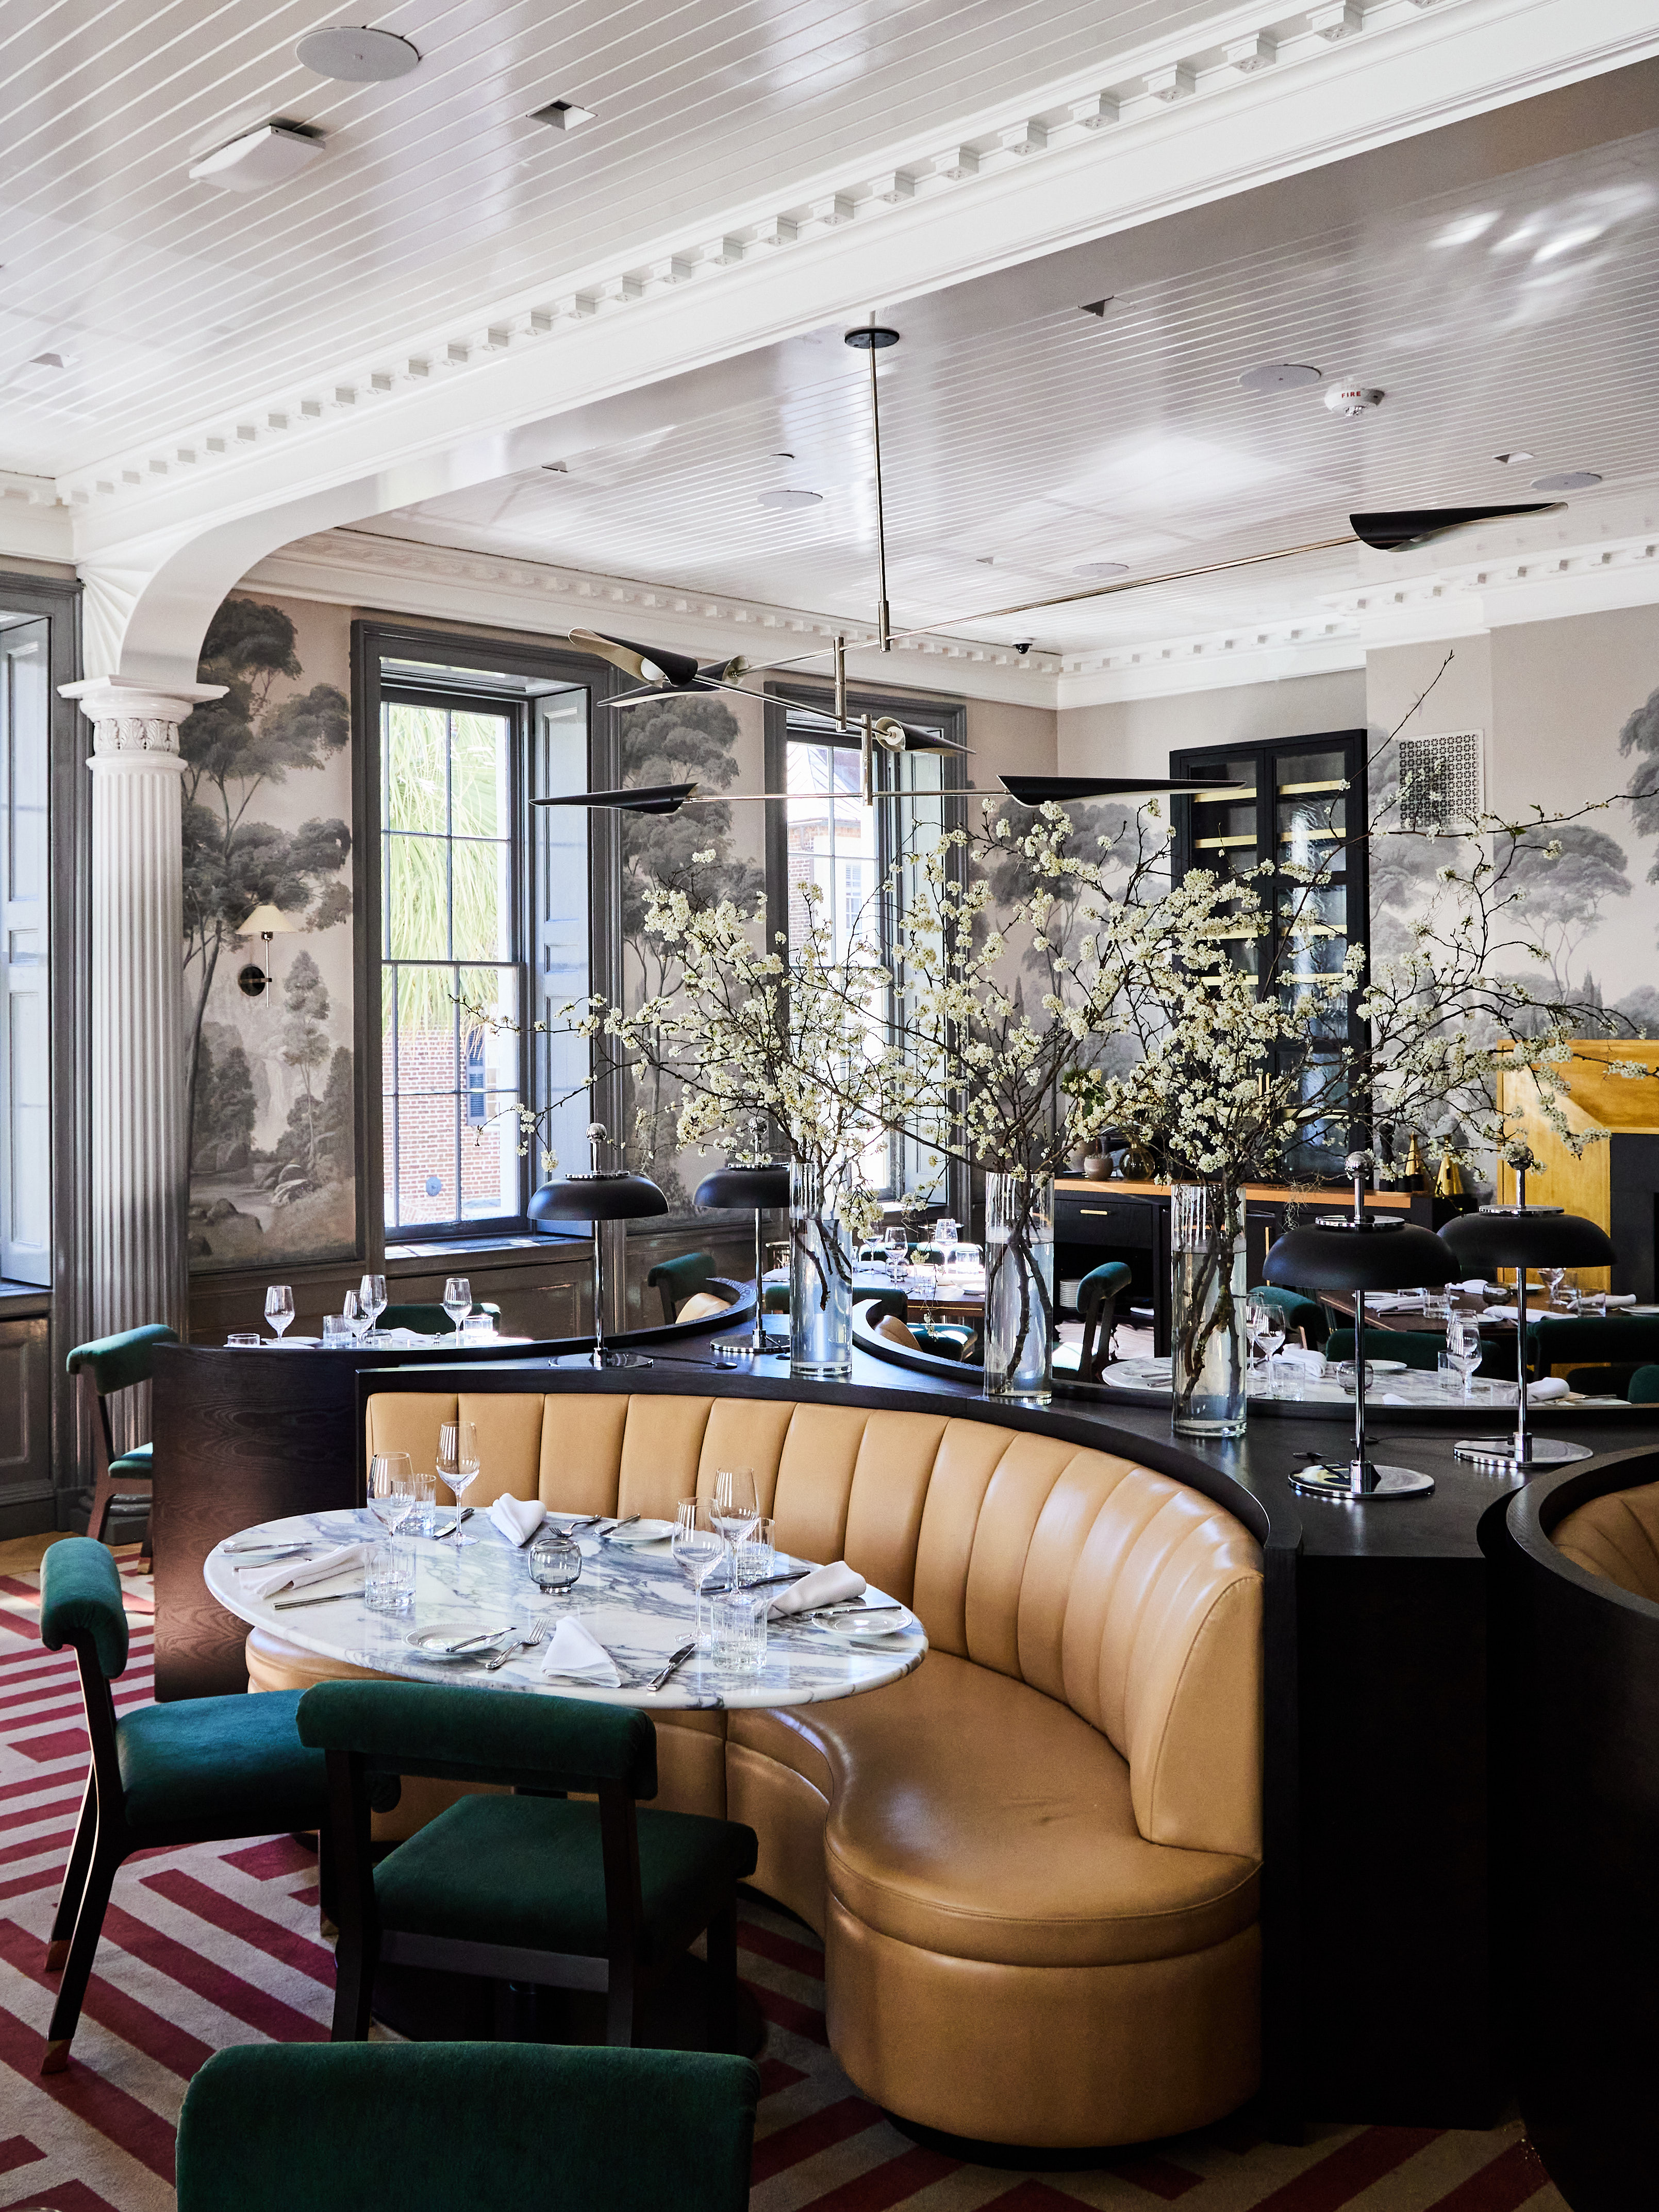 Sorelle restaurant has an inviting interior. (Peter Frank Edwards)